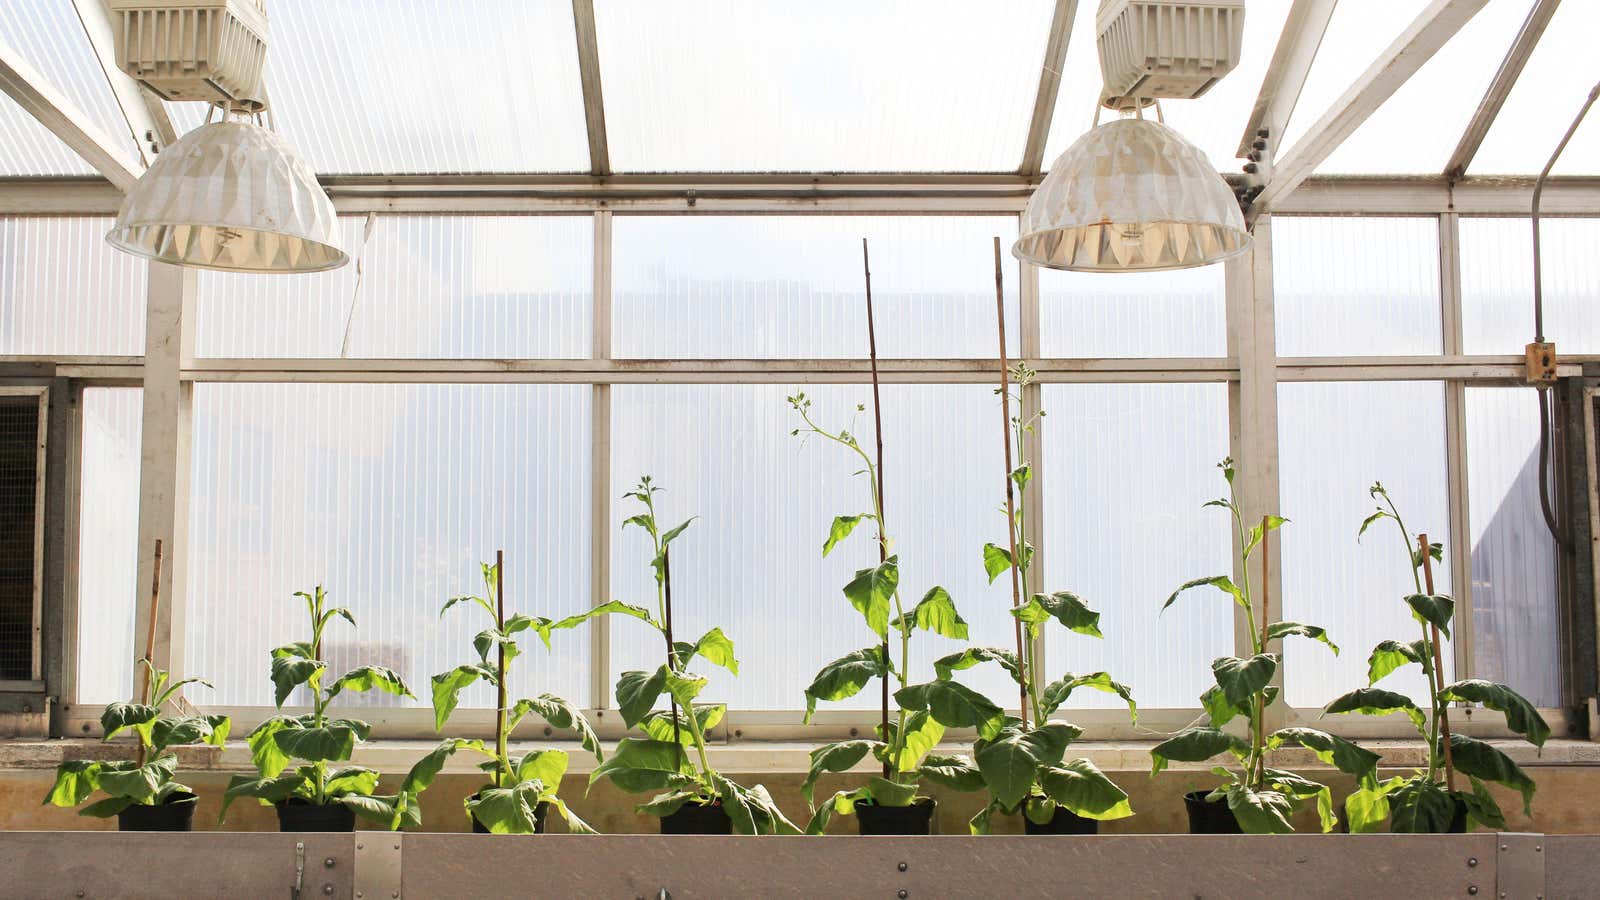 A genetic tweak made these tobacco plants grow 40% bigger.